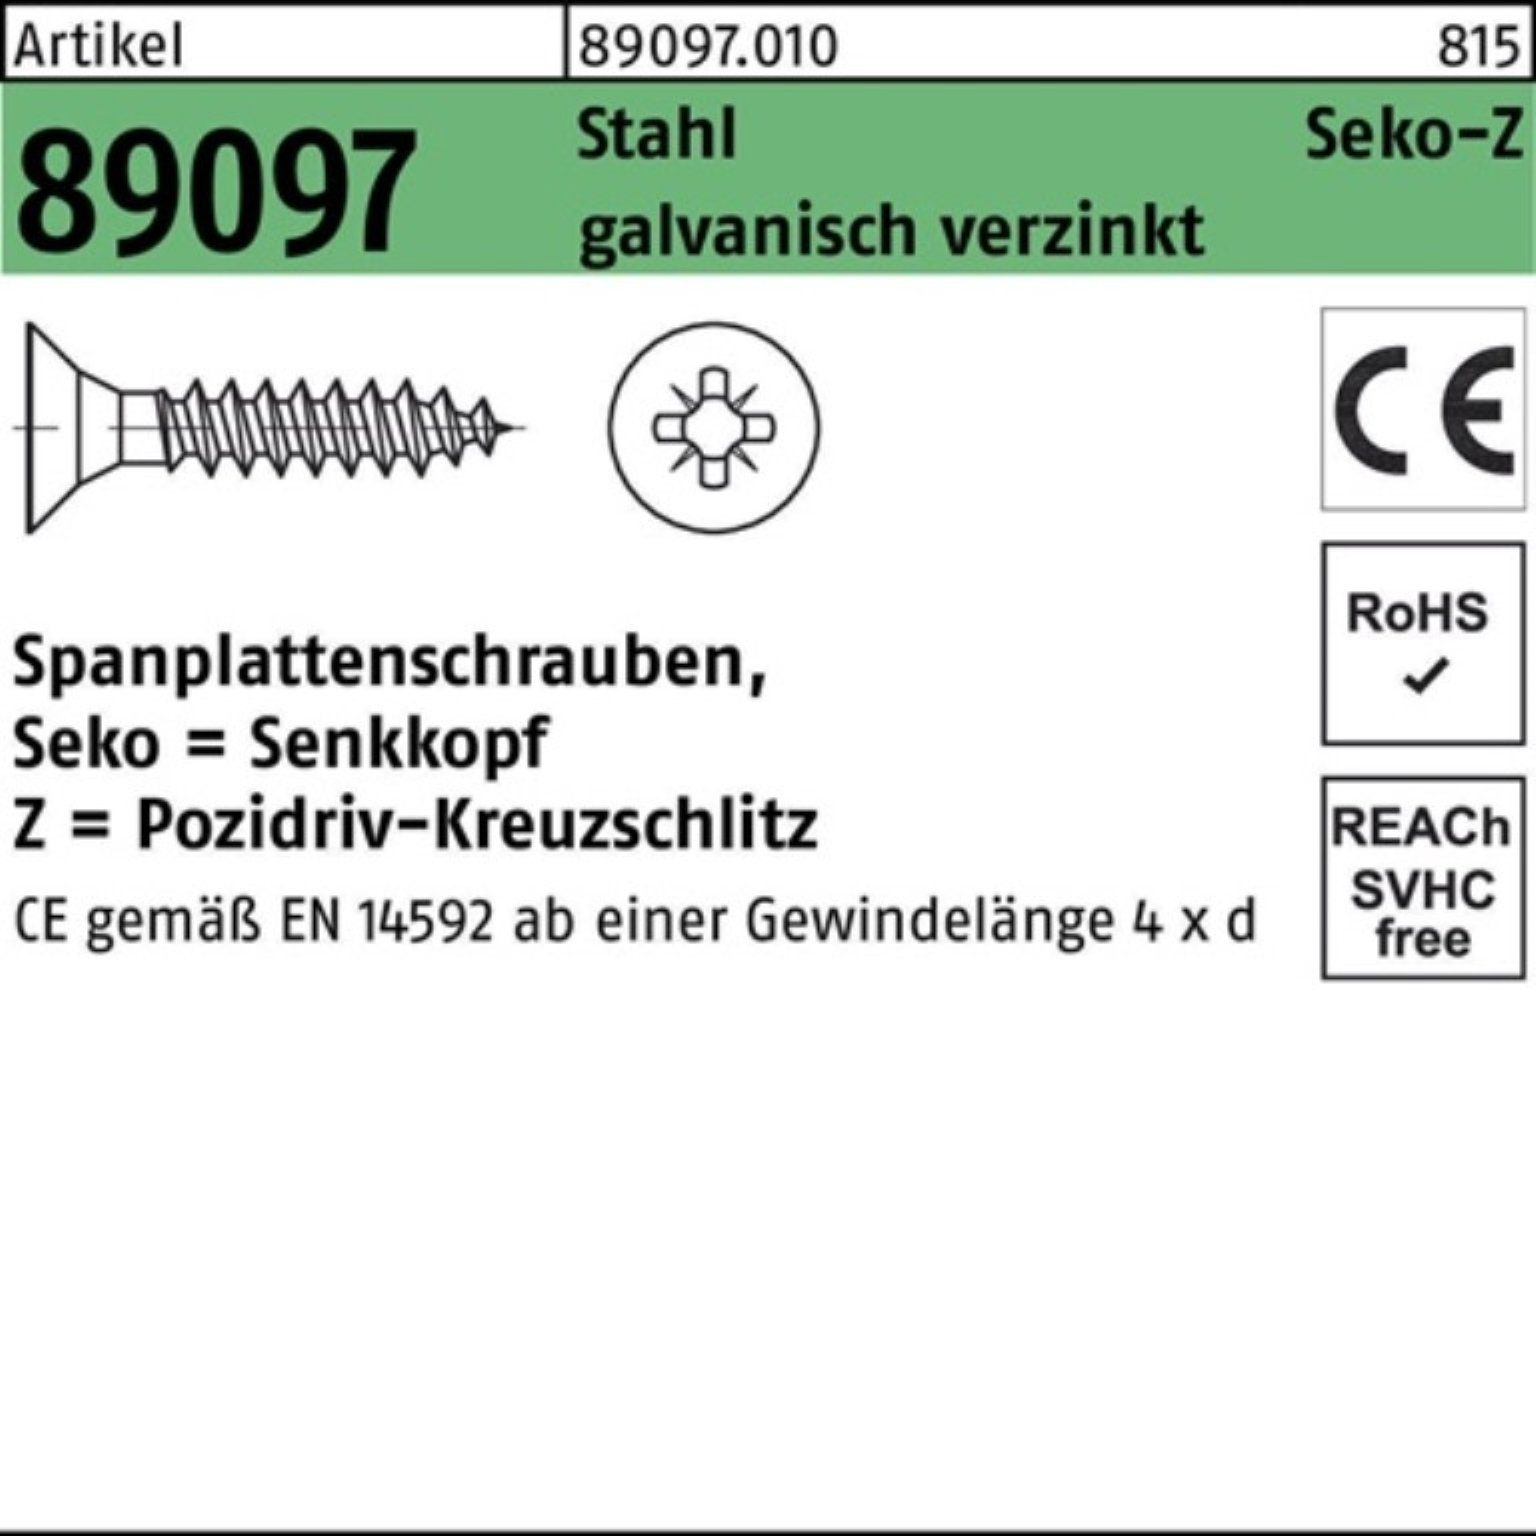 Reyher Spanplattenschraube 1000er Pack SEKO galv.v R 3x35-Z VG 89097 Stahl Spanplattenschraube PZ